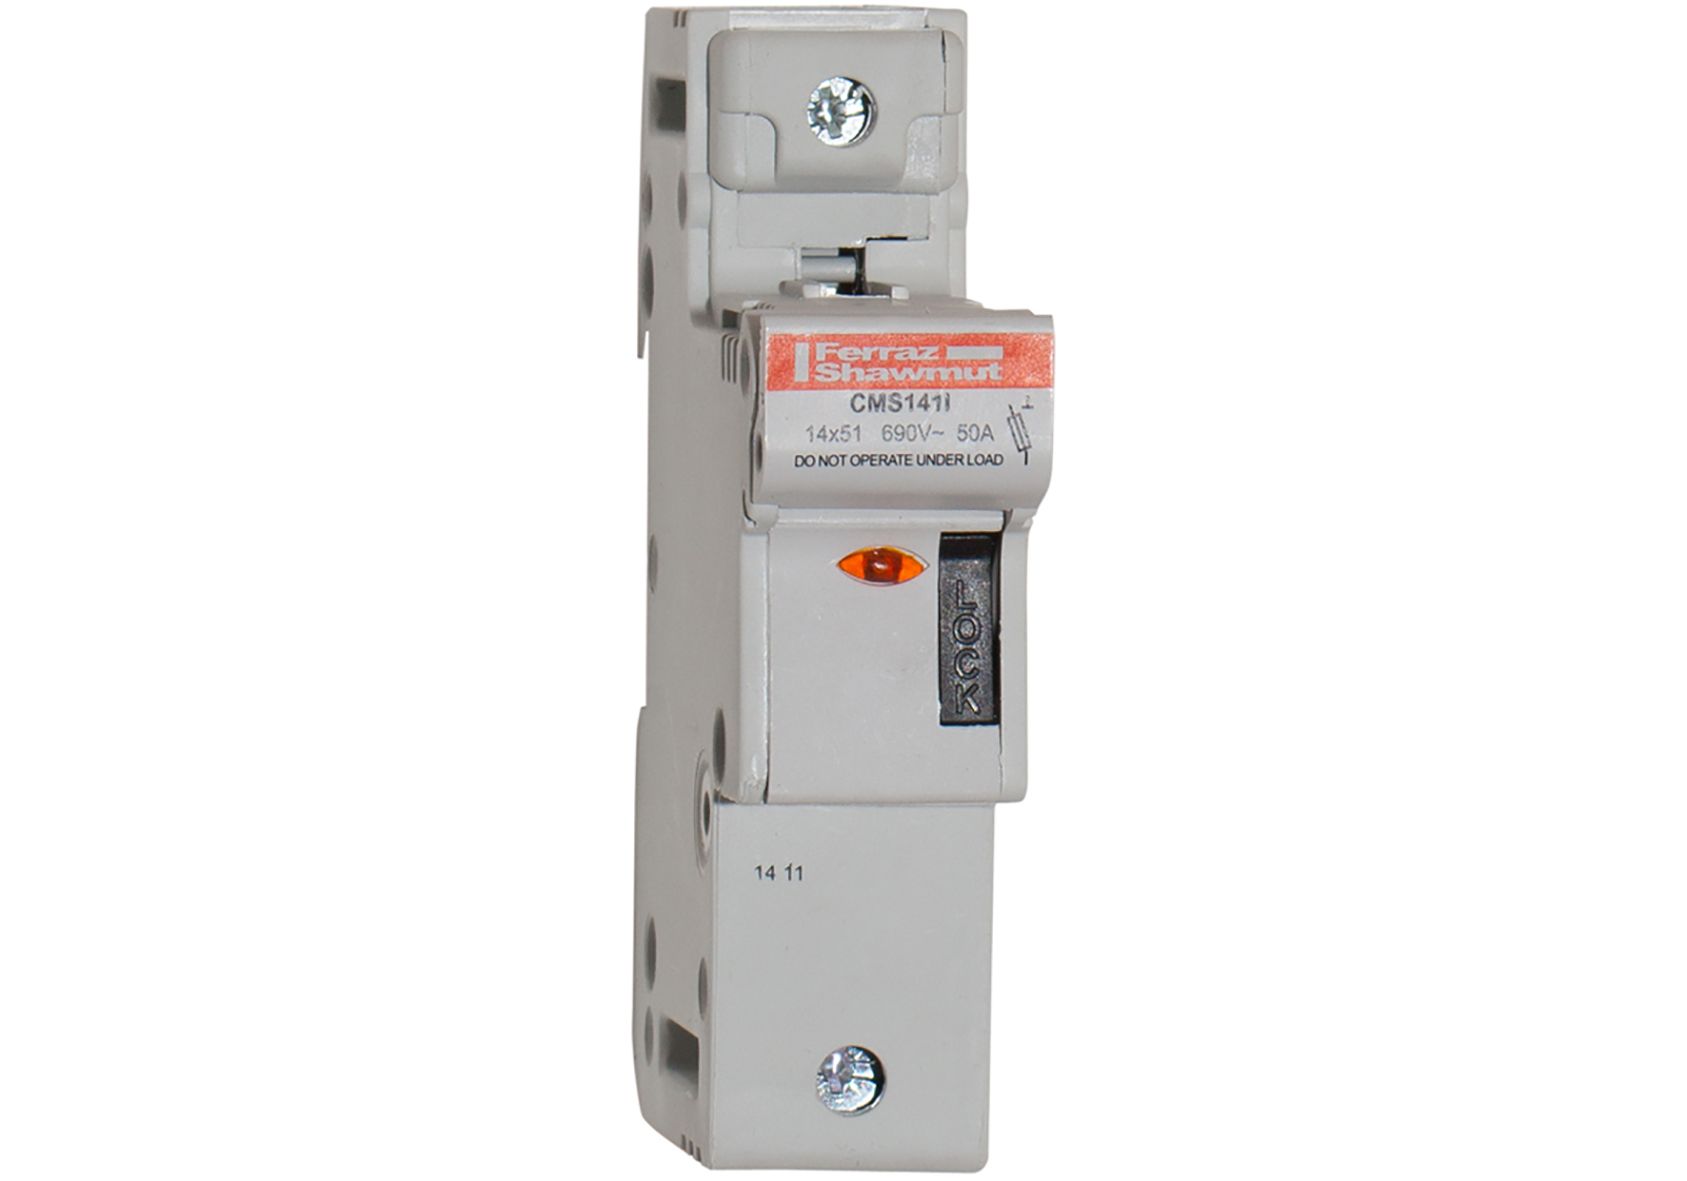 L331049 - modular fuse holder, IEC, 1P, indicator light, 14x51, DIN rail mounting, IP20